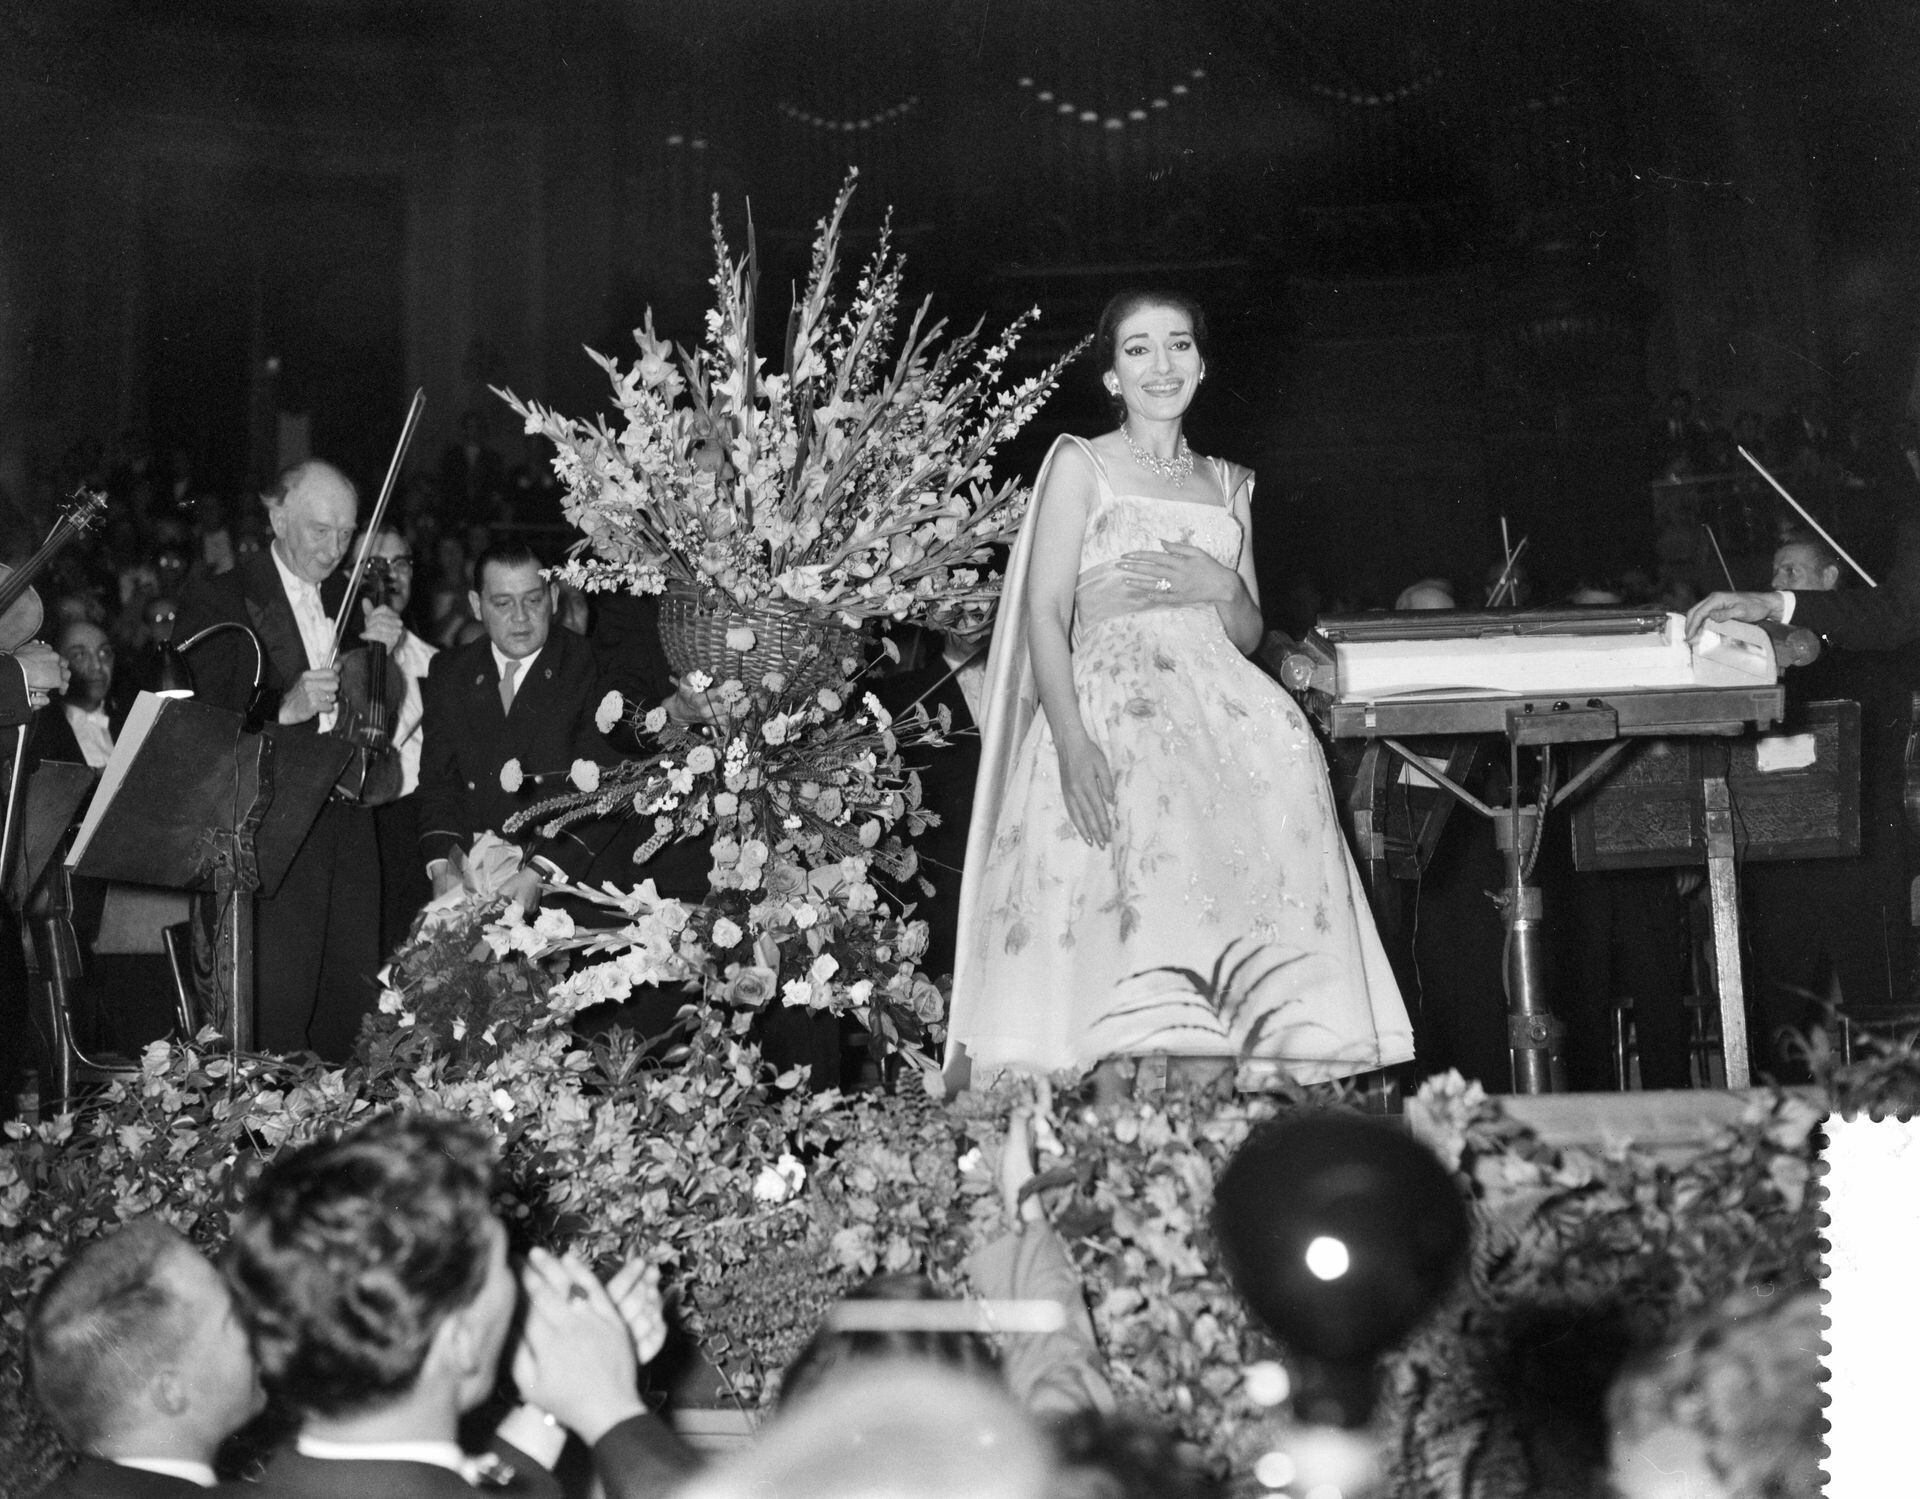 #1618 - Wat maakte opera-diva Maria Callas zo iconisch?